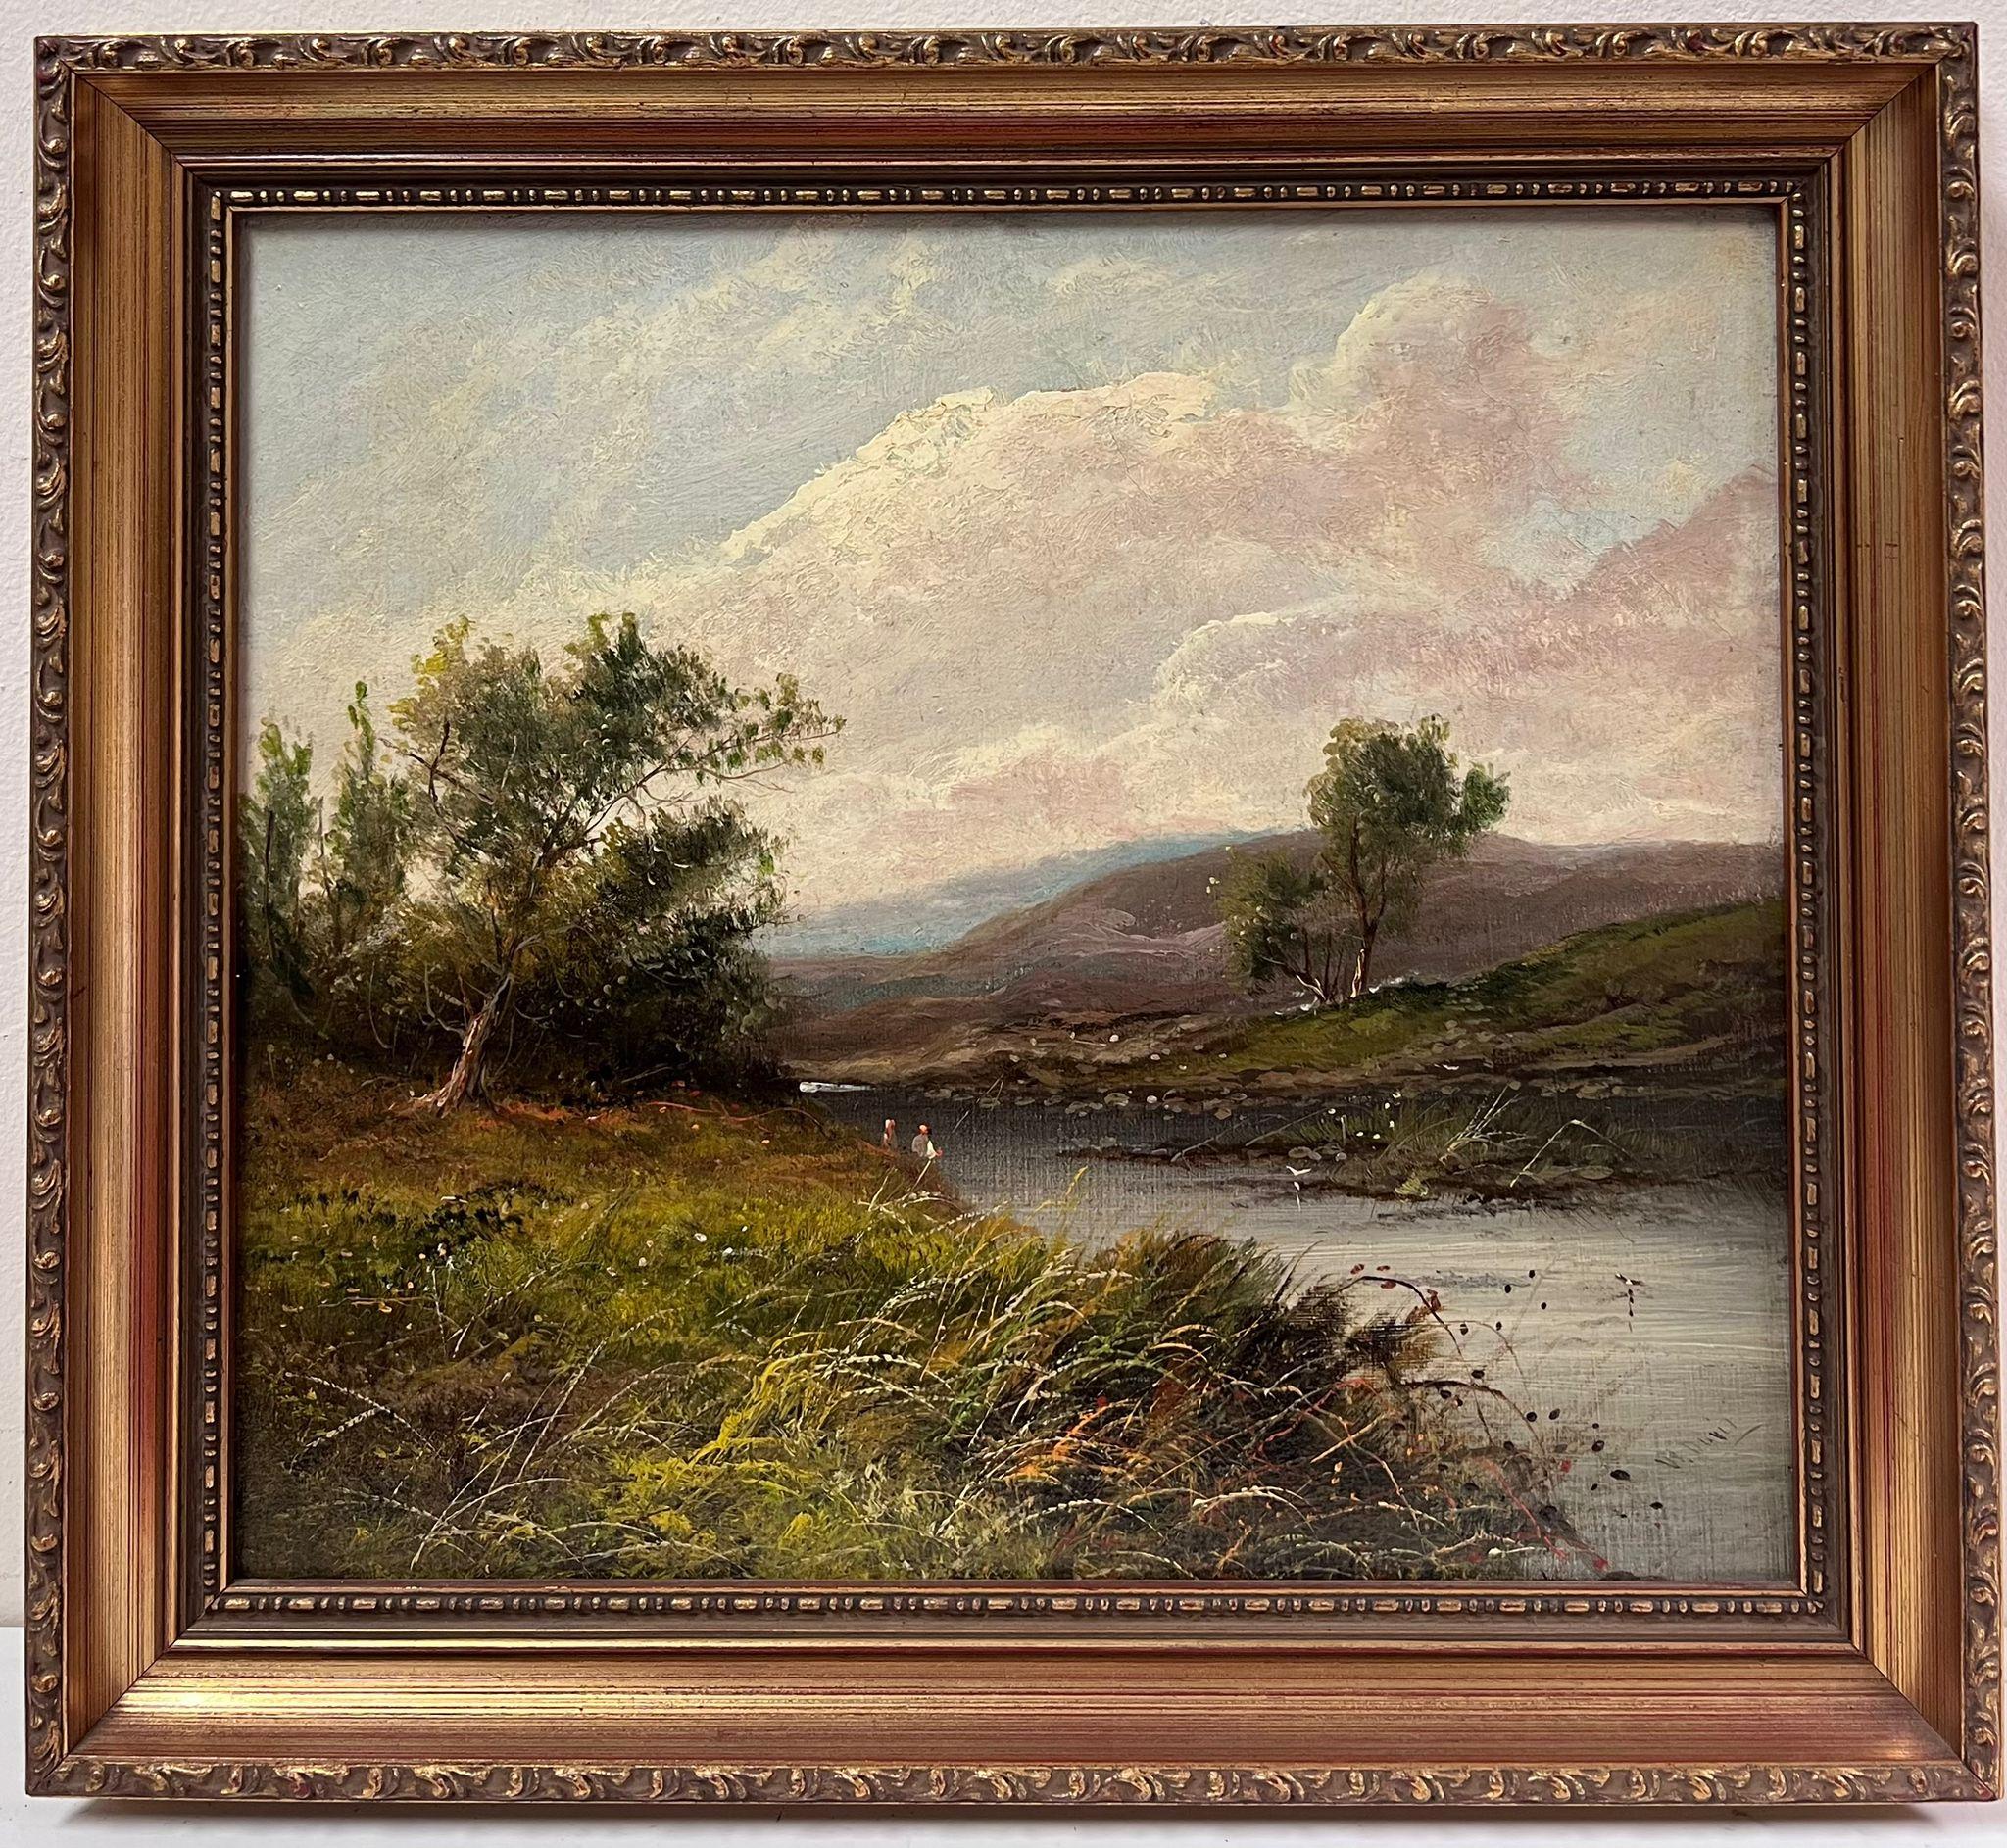 Antique British Landscape Painting - 19th Century British Oil Painting Angler in River Landscape Rising Hills & Sky